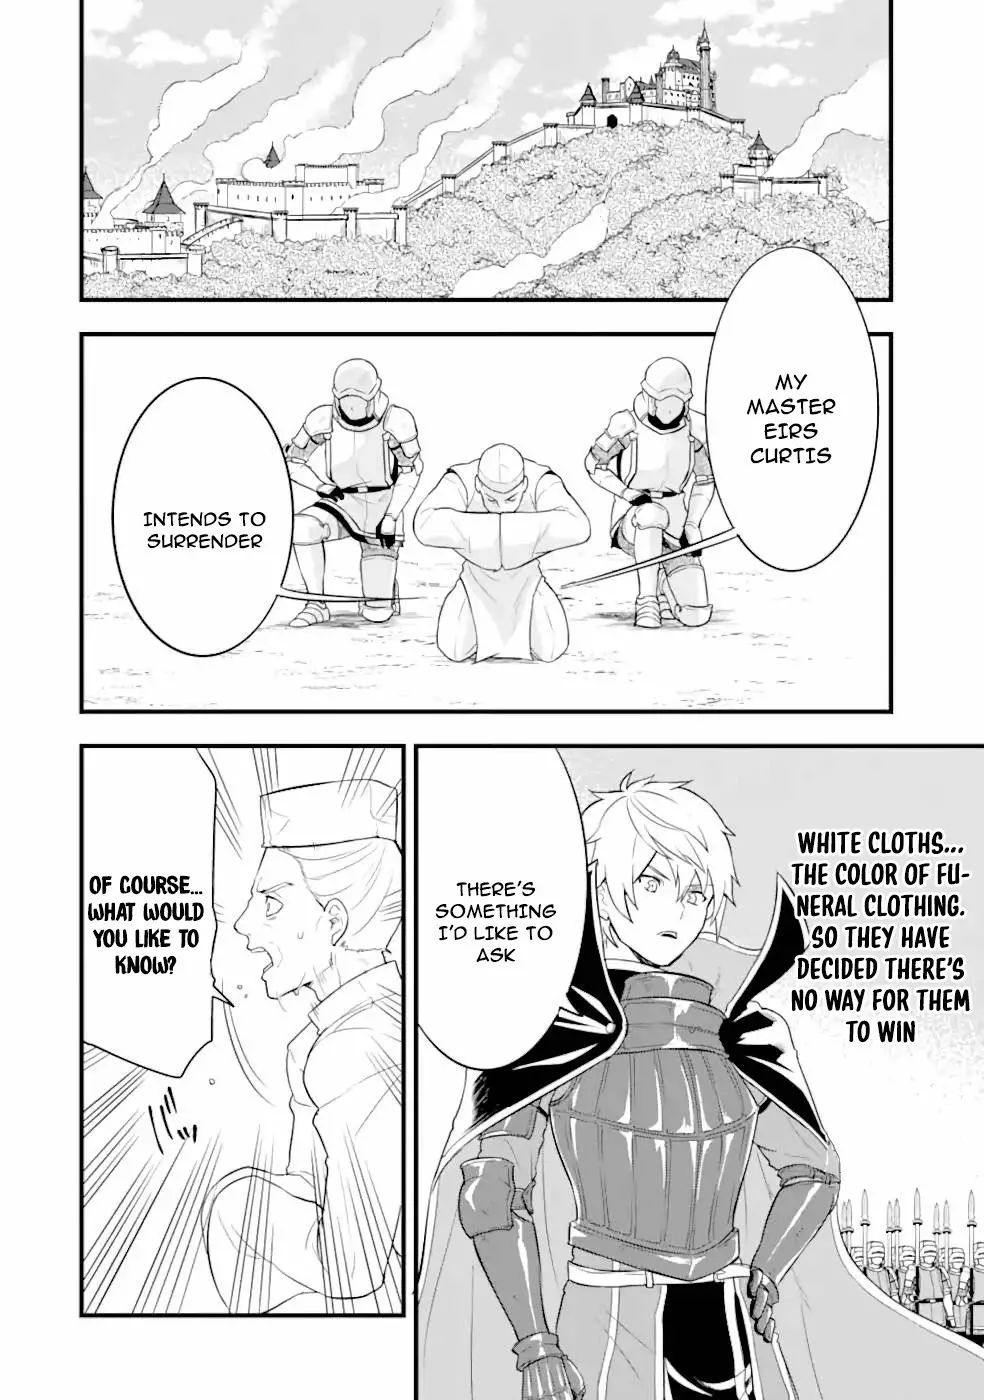 Mysterious Job Called Oda Nobunaga - 31 page 31-f691f0c1